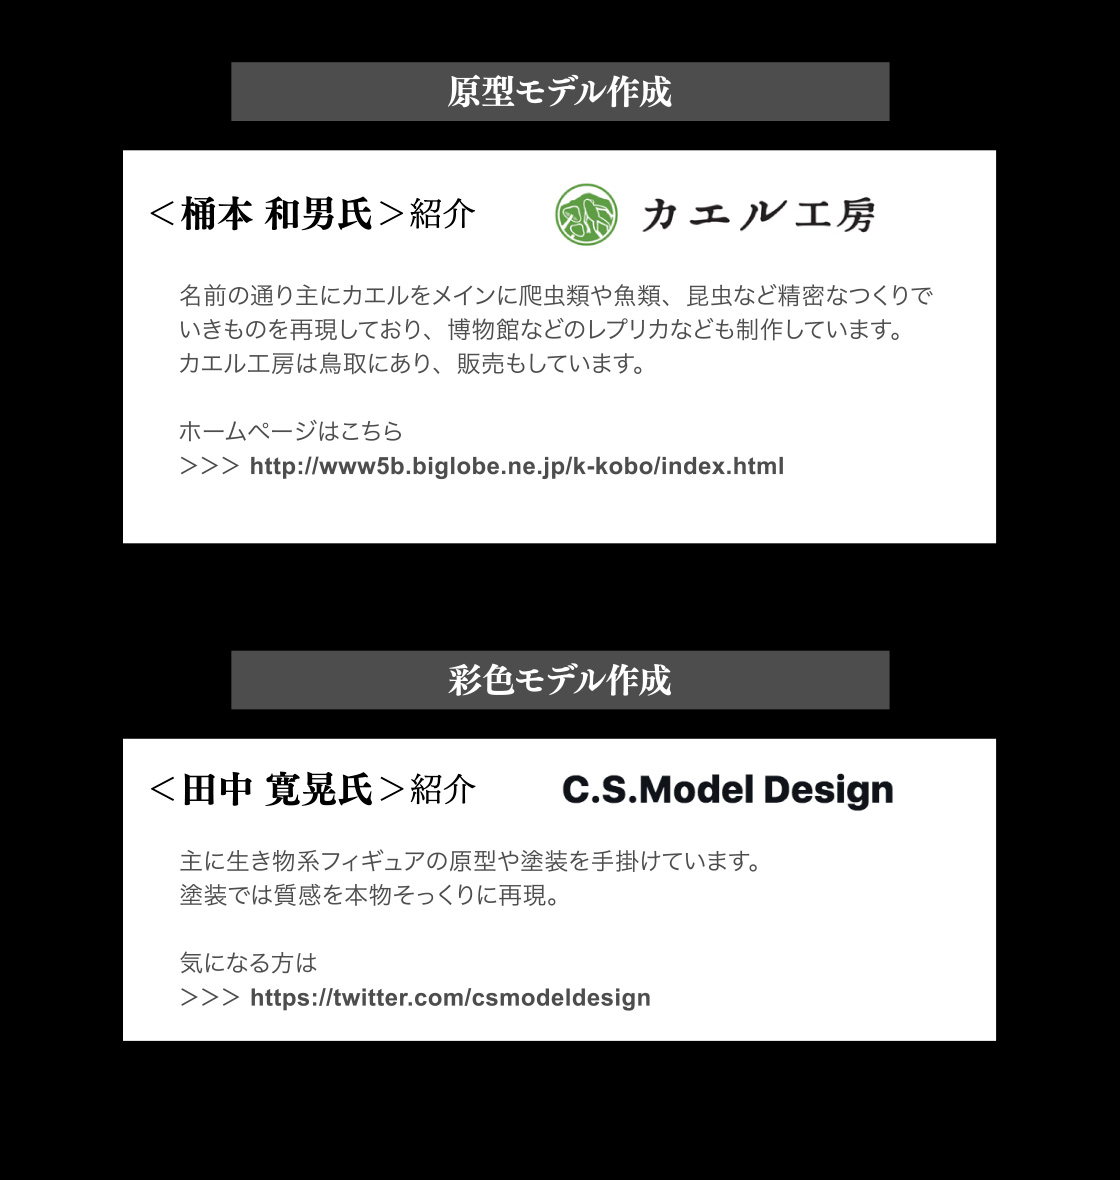 原型モデル作成：桶本 和男氏 彩色モデル作成：田中 寛晃氏